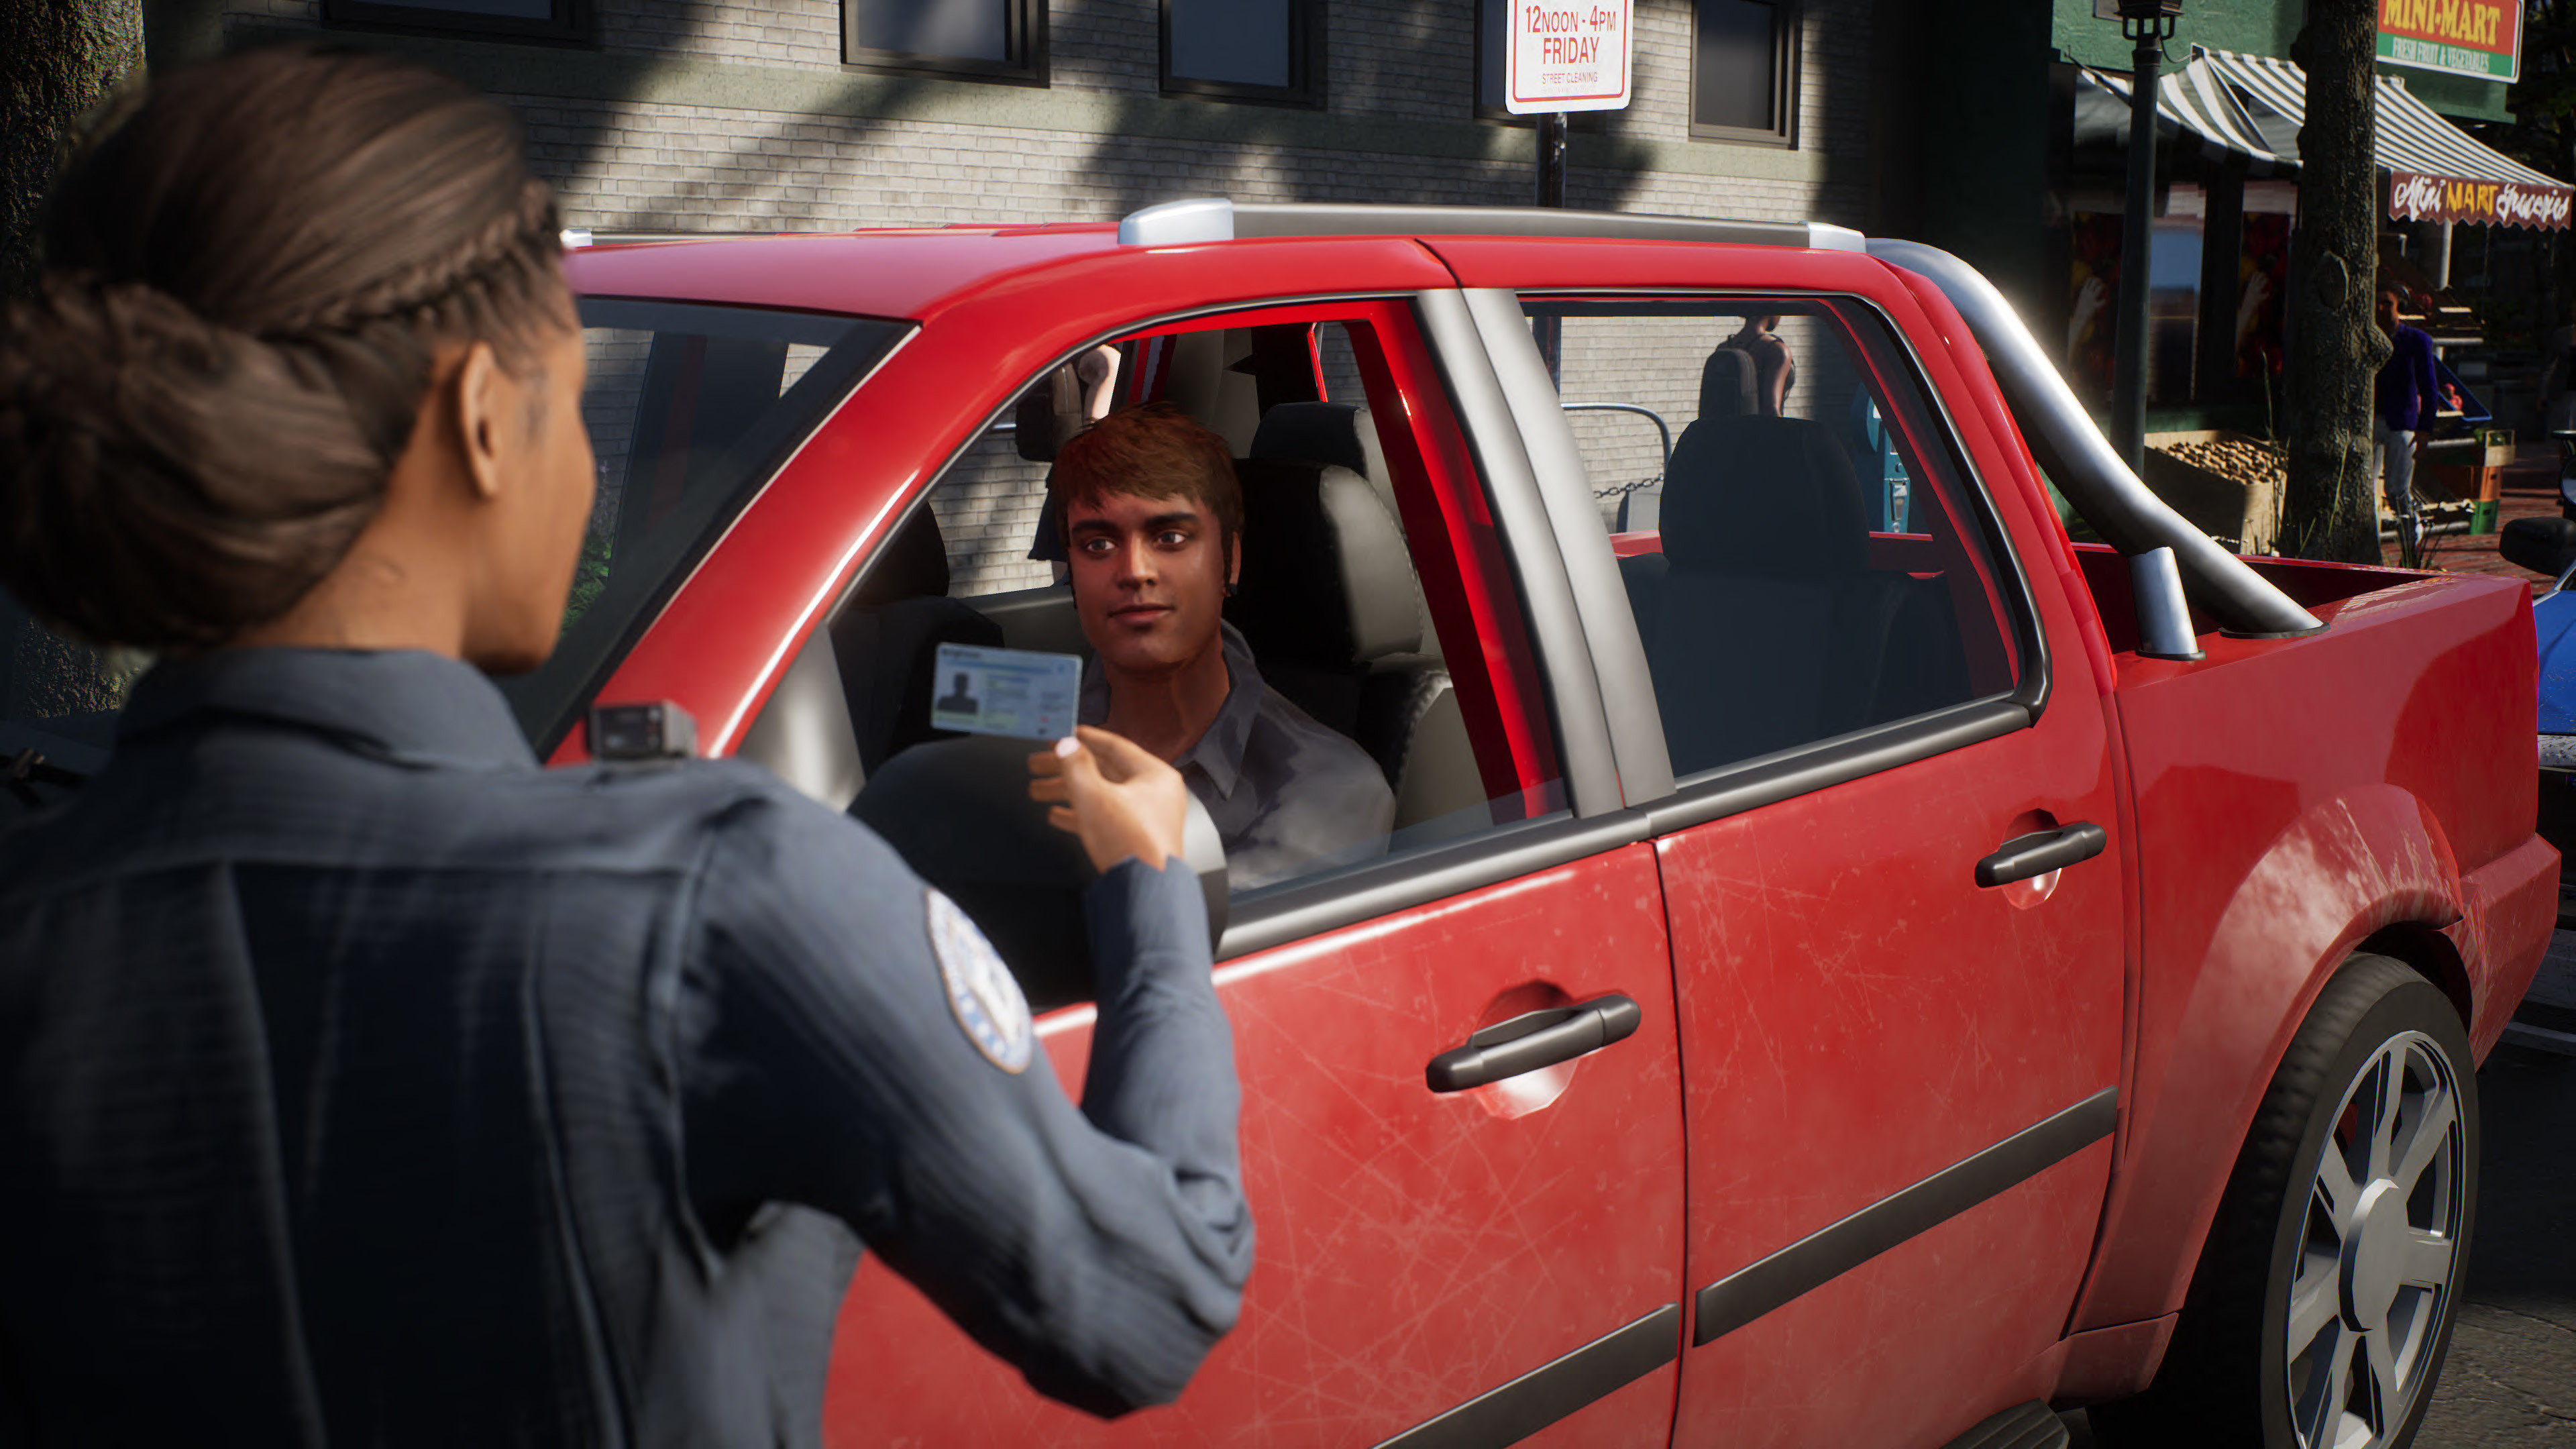 Police Simulator: Patrol Officers screenshot